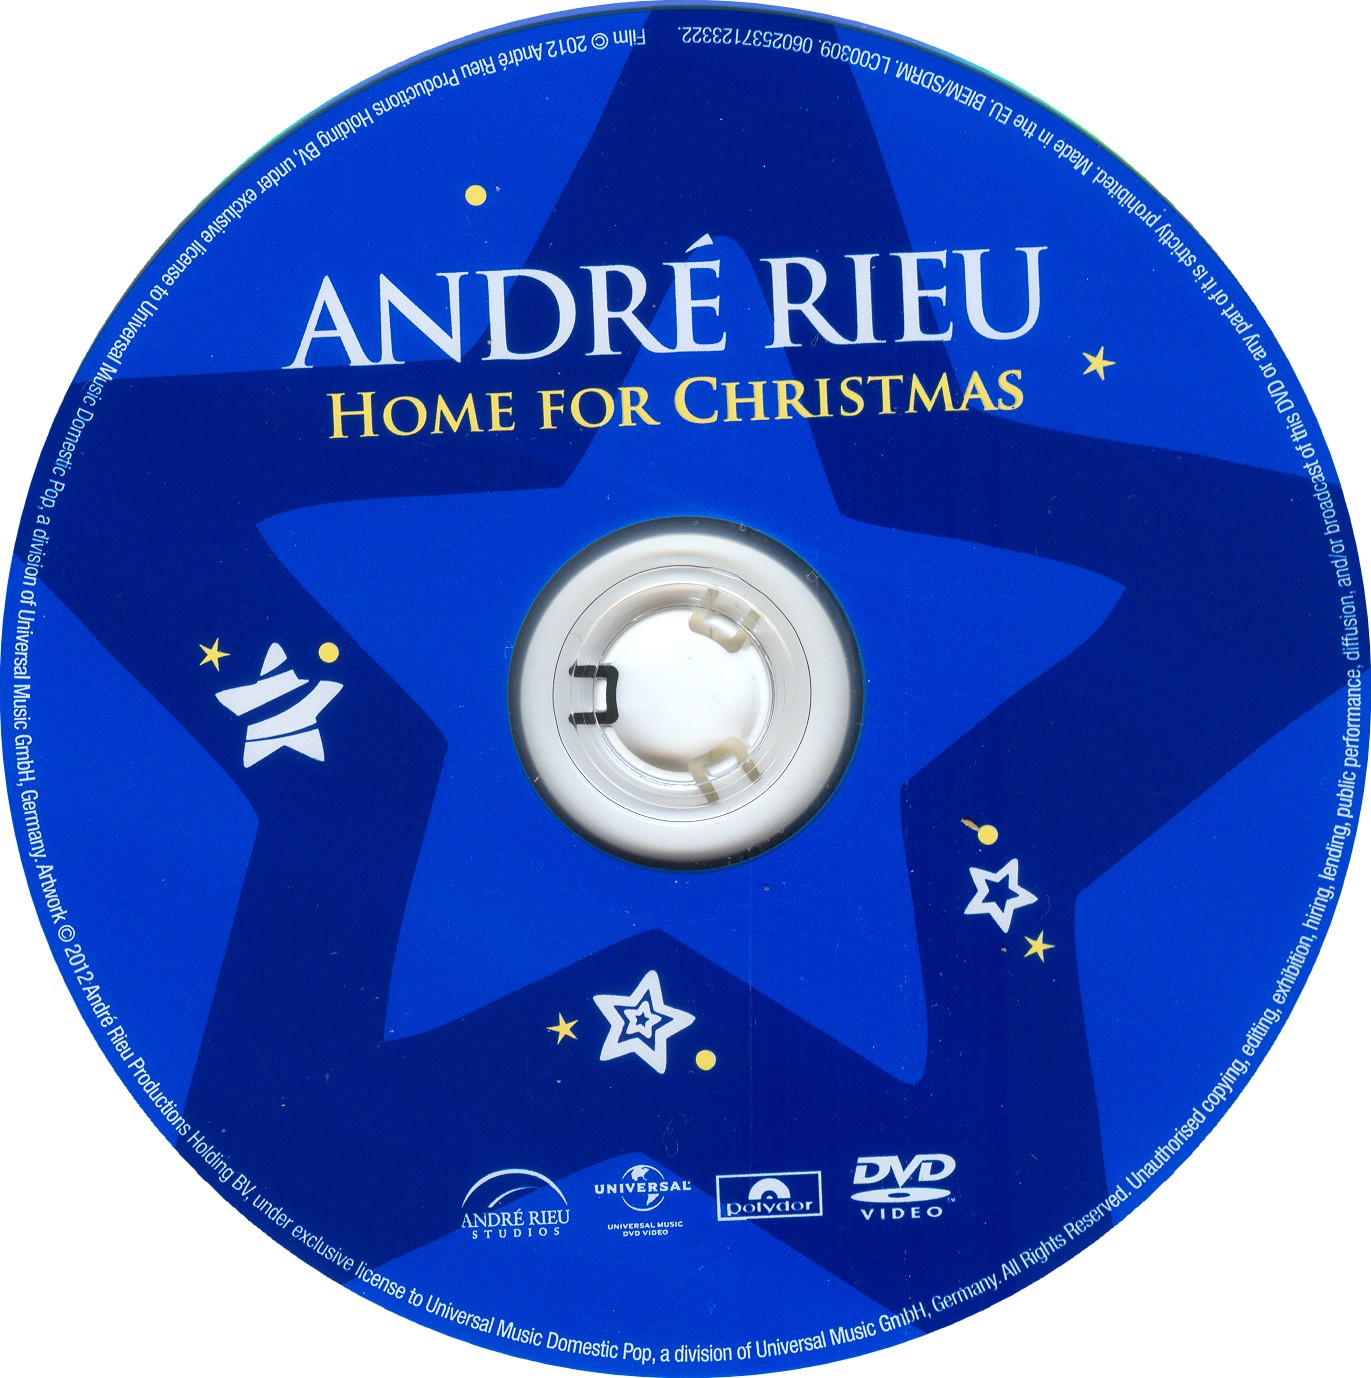 Andre Rieu Home for Christmas